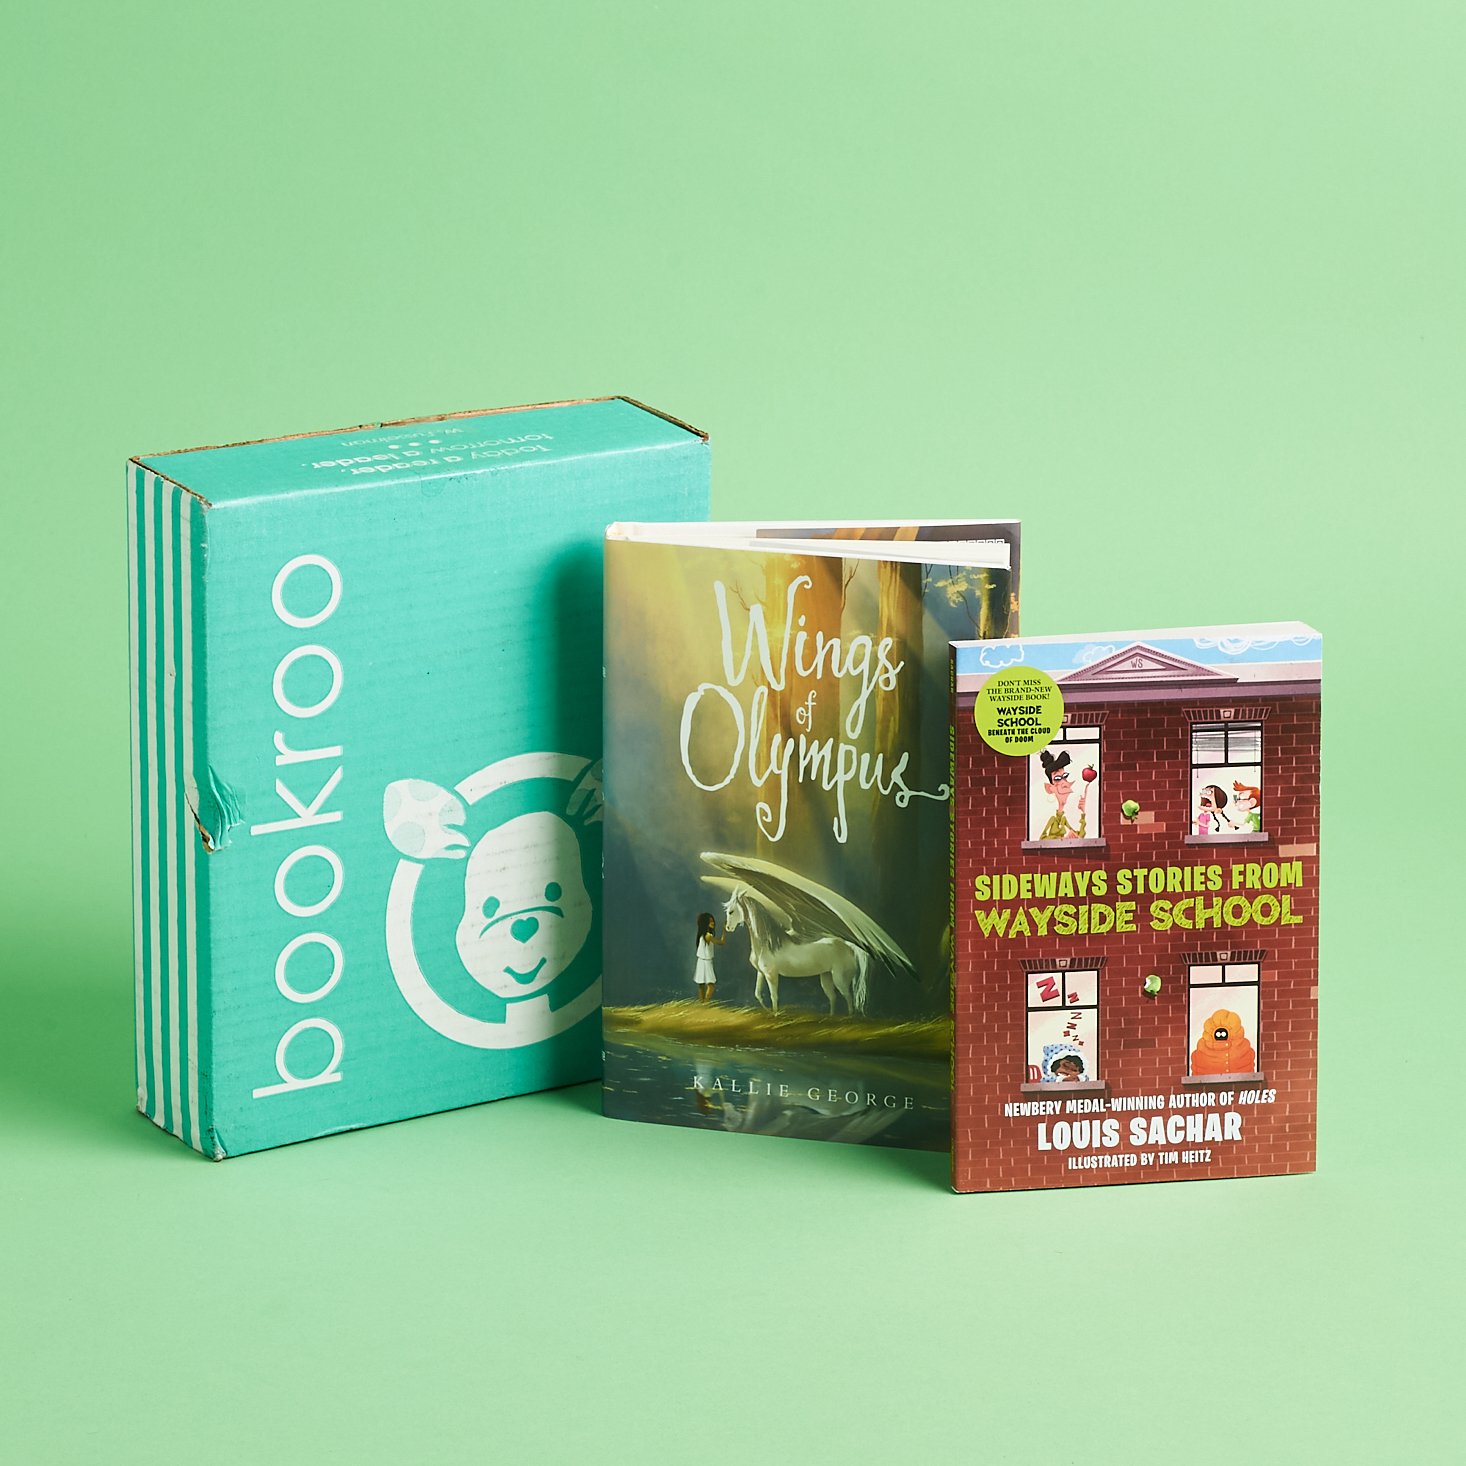 bookroo box and books